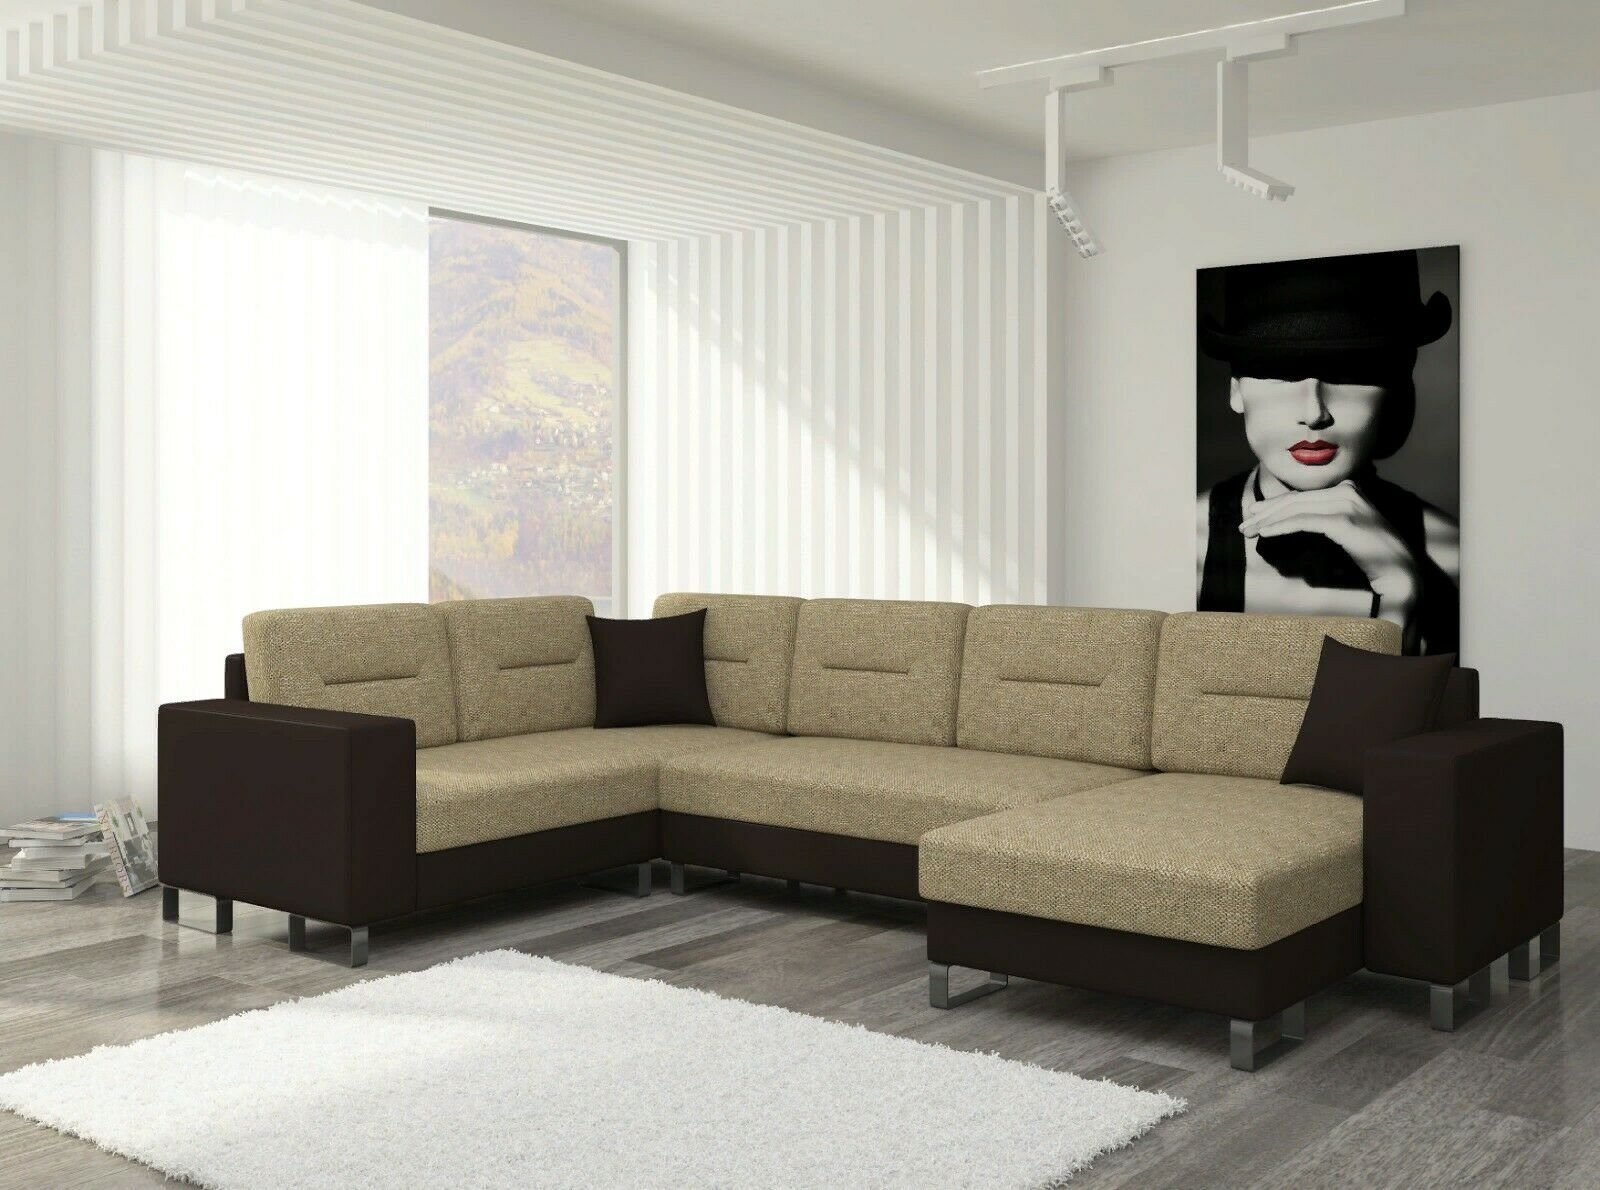 Bettfunktion Schlafsofa Ecksofa Bettfunktion Ecksofa Couch Polster Leder Design Mit Beige/Braun Textil, JVmoebel